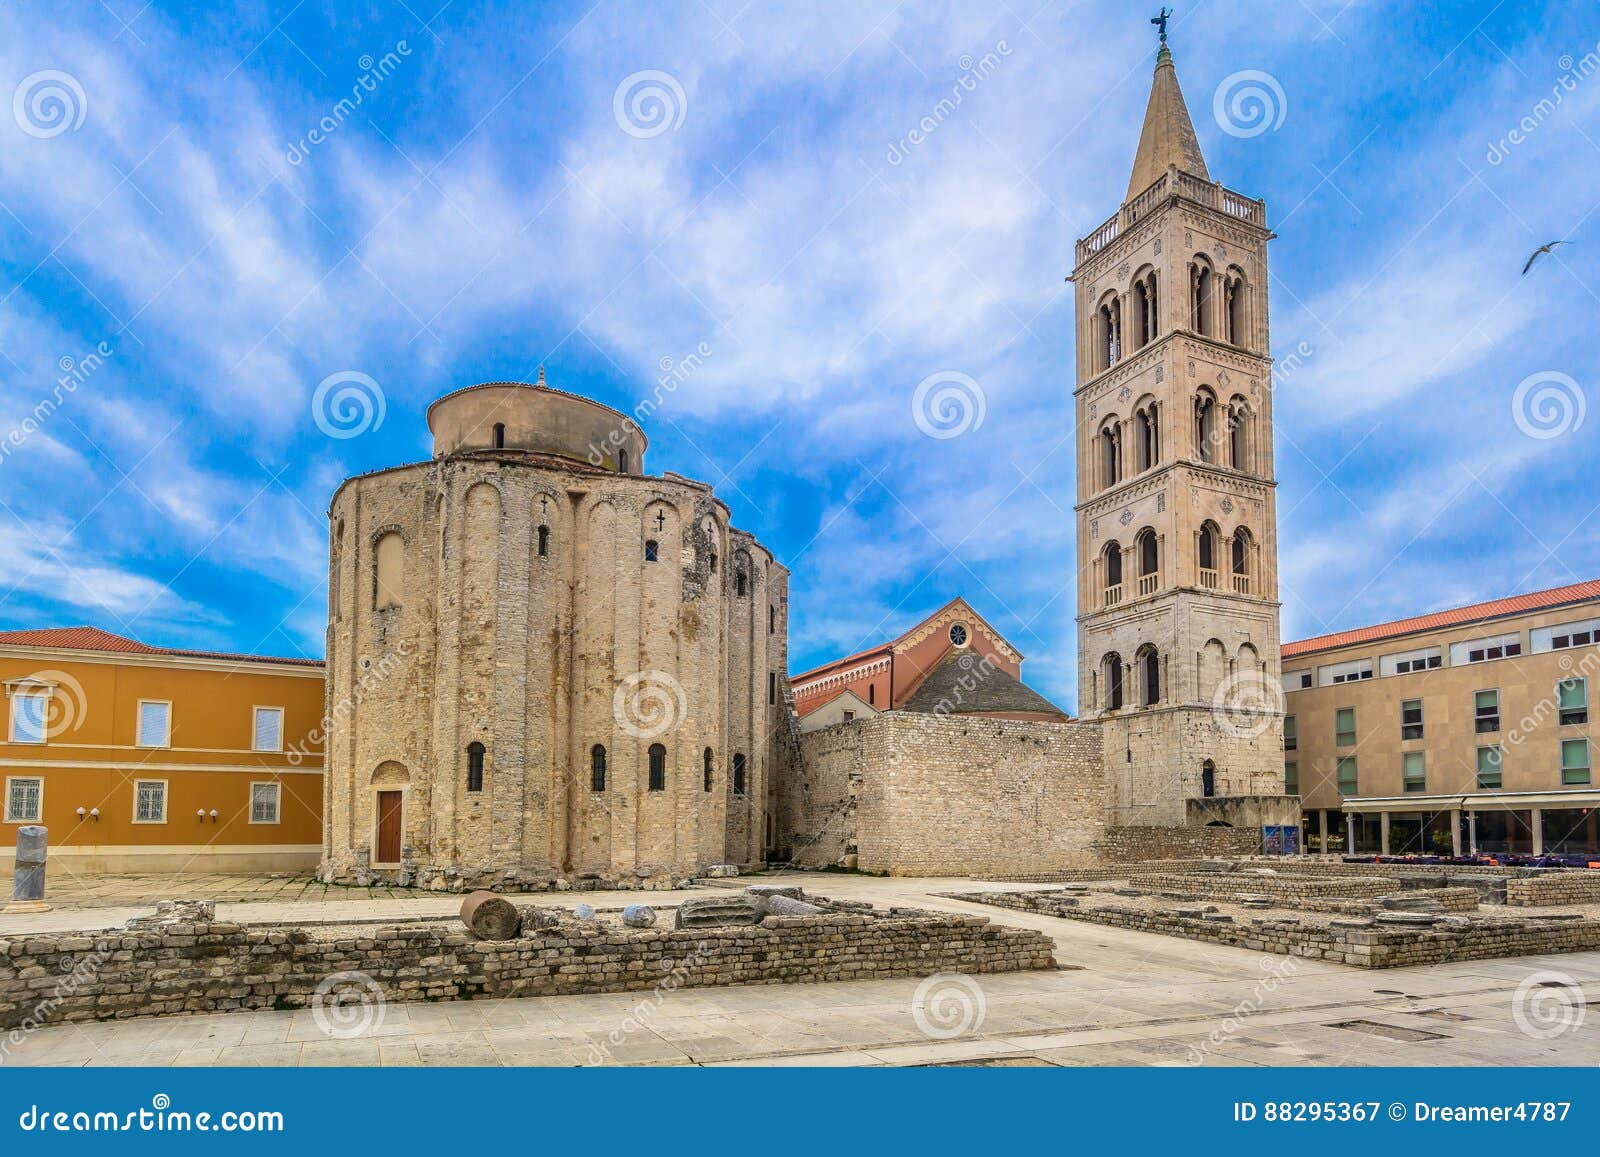 Old Town Zadar in Europe, Croatia. Stock Image - Image of historic